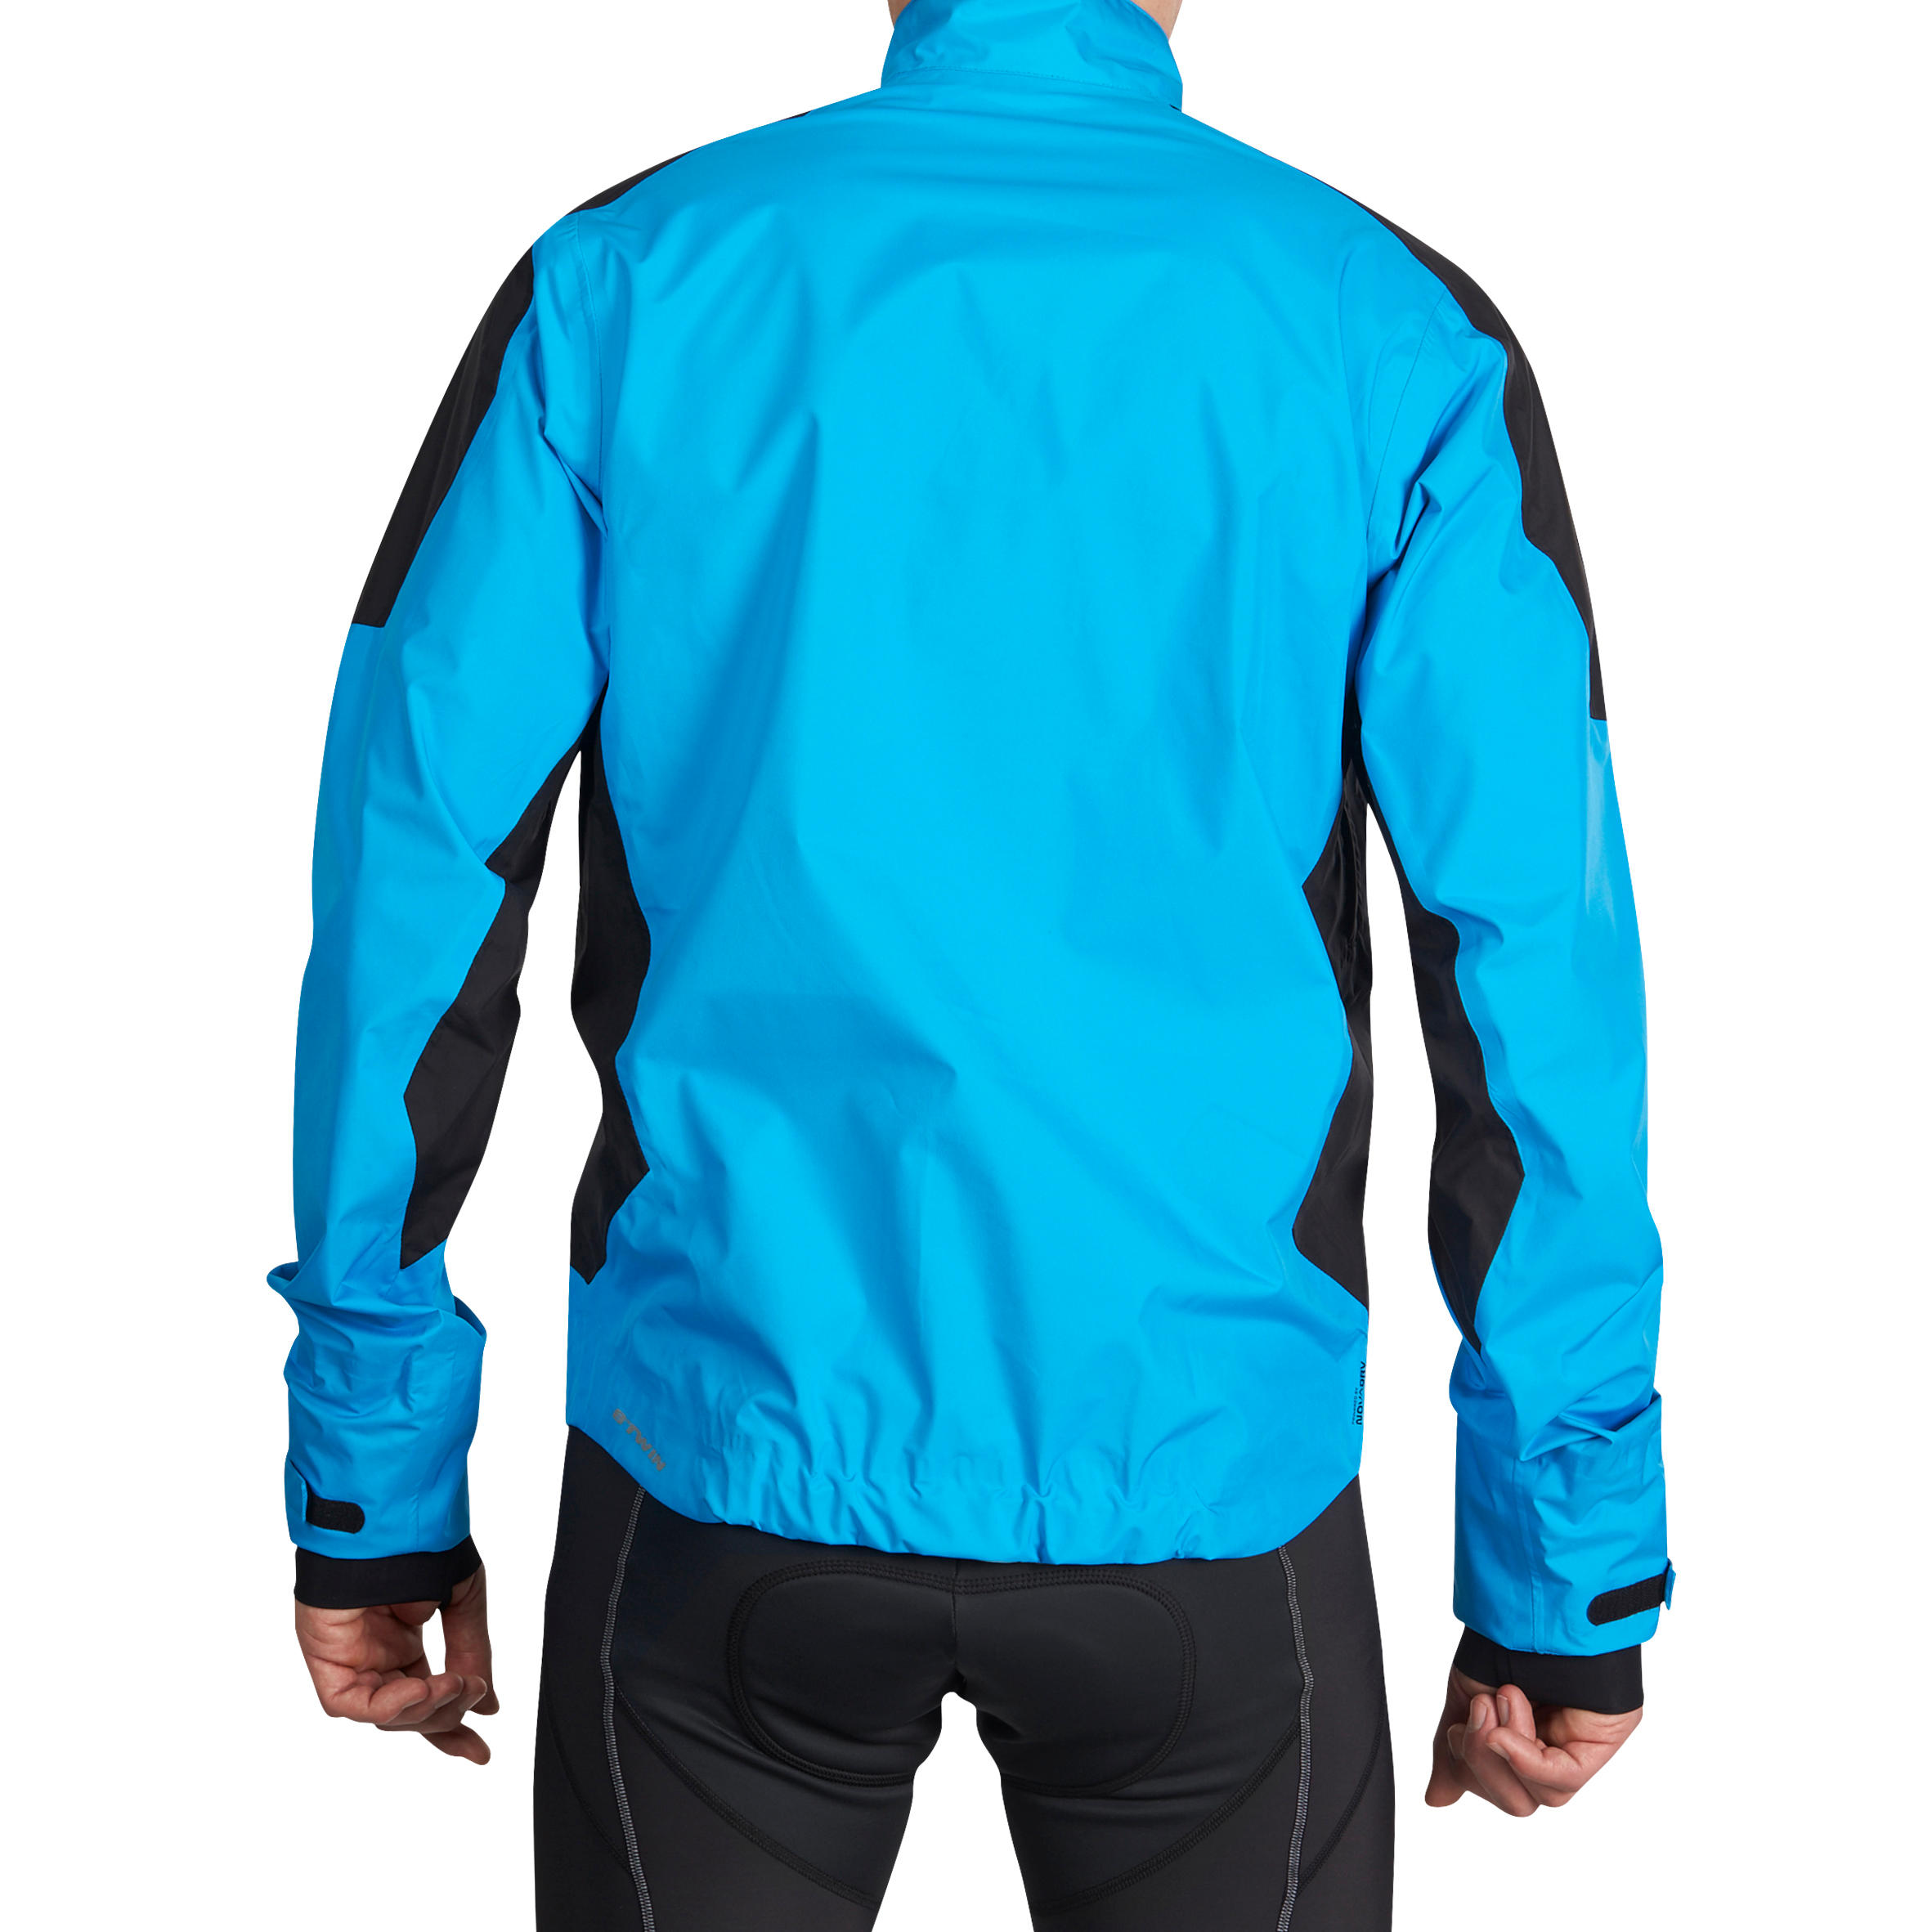 900 Mountain Biking Rainproof Jacket - Blue/Black 4/20